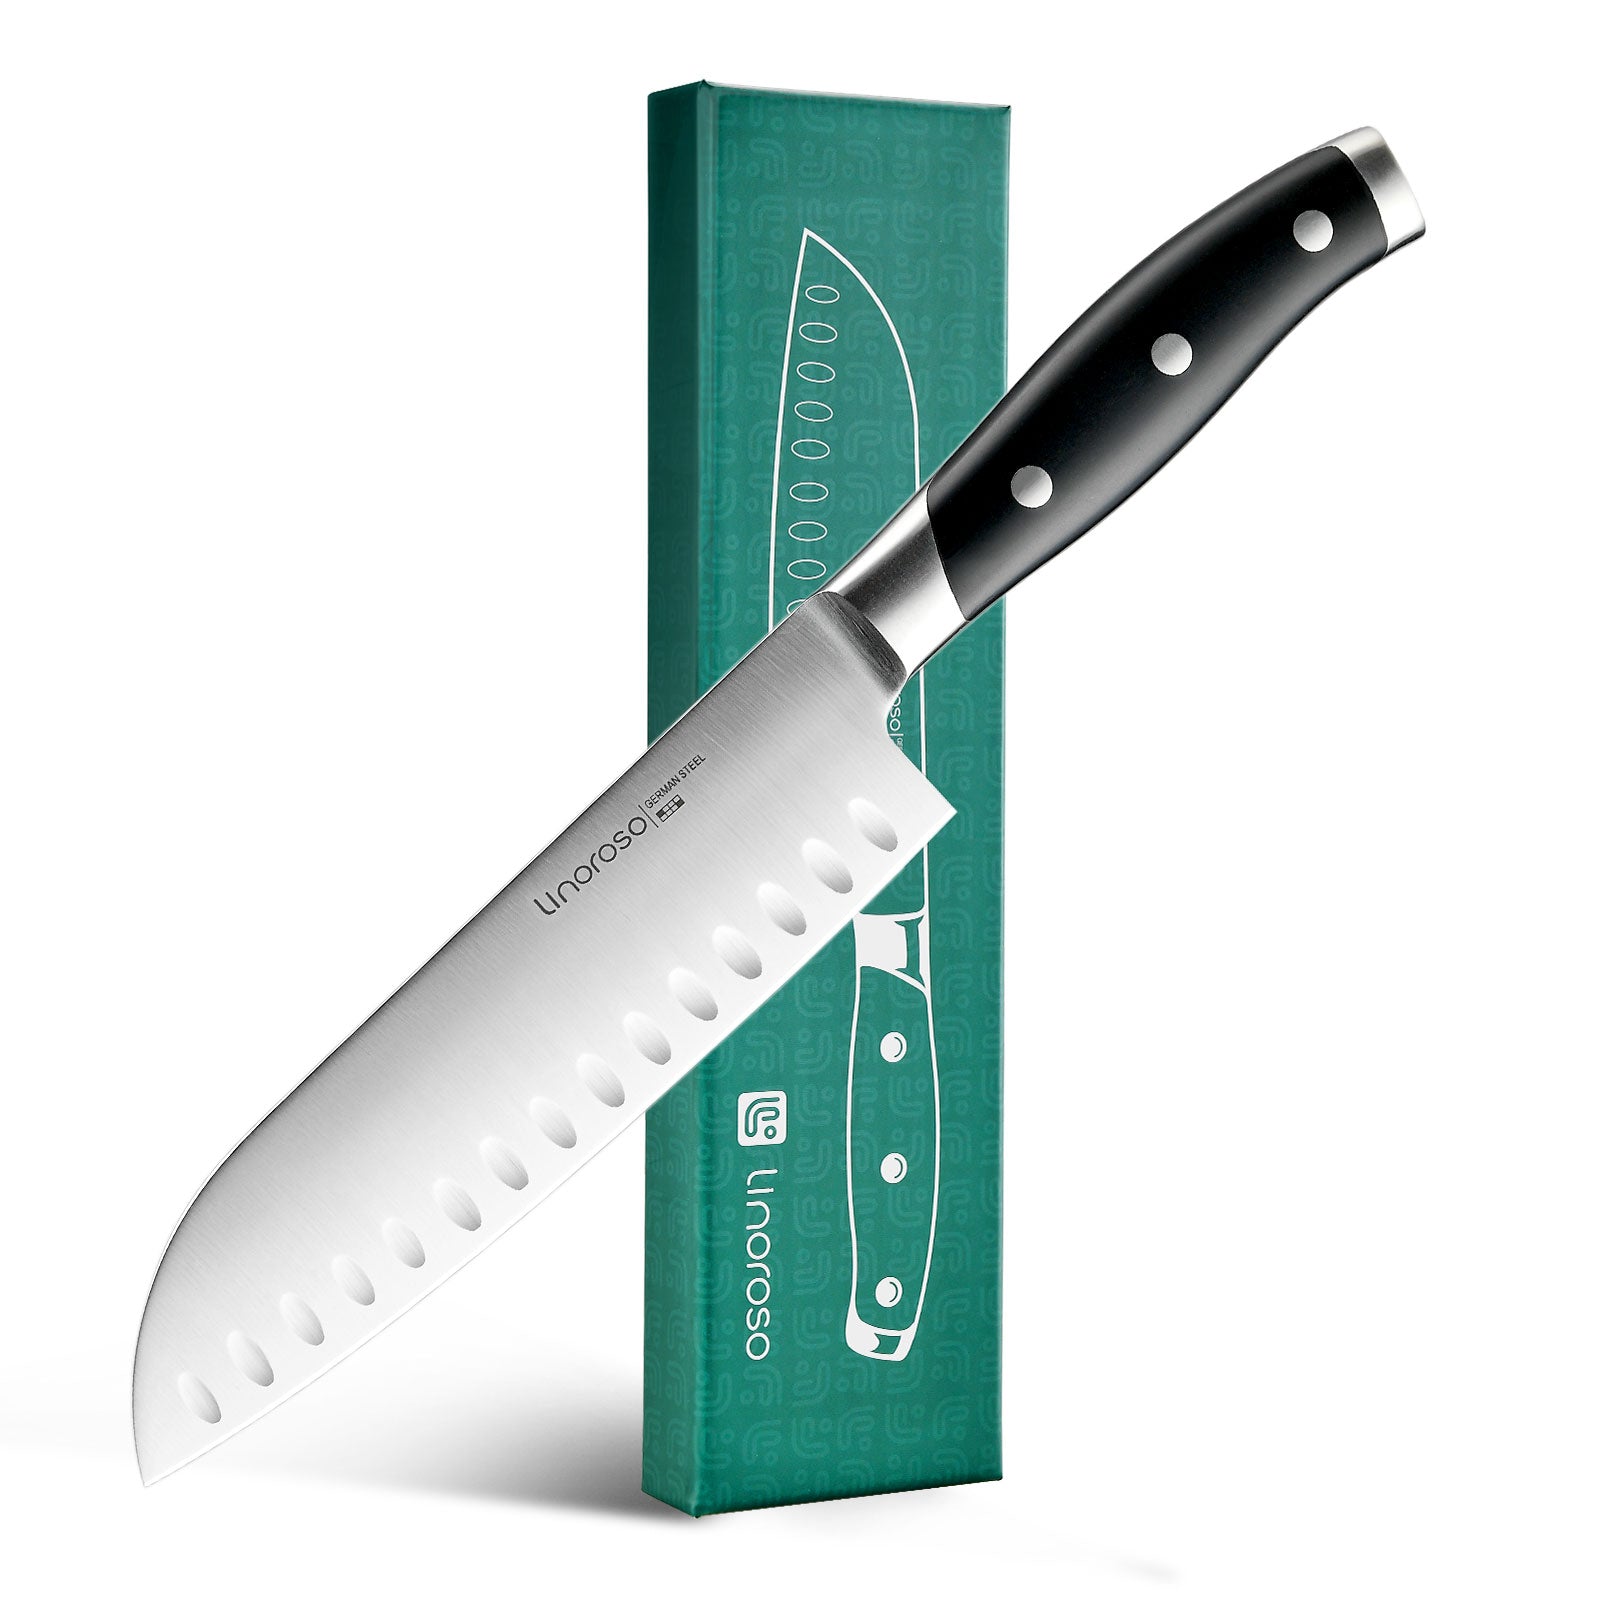 Linoroso Santoku Knife 7 inch -Classic Series